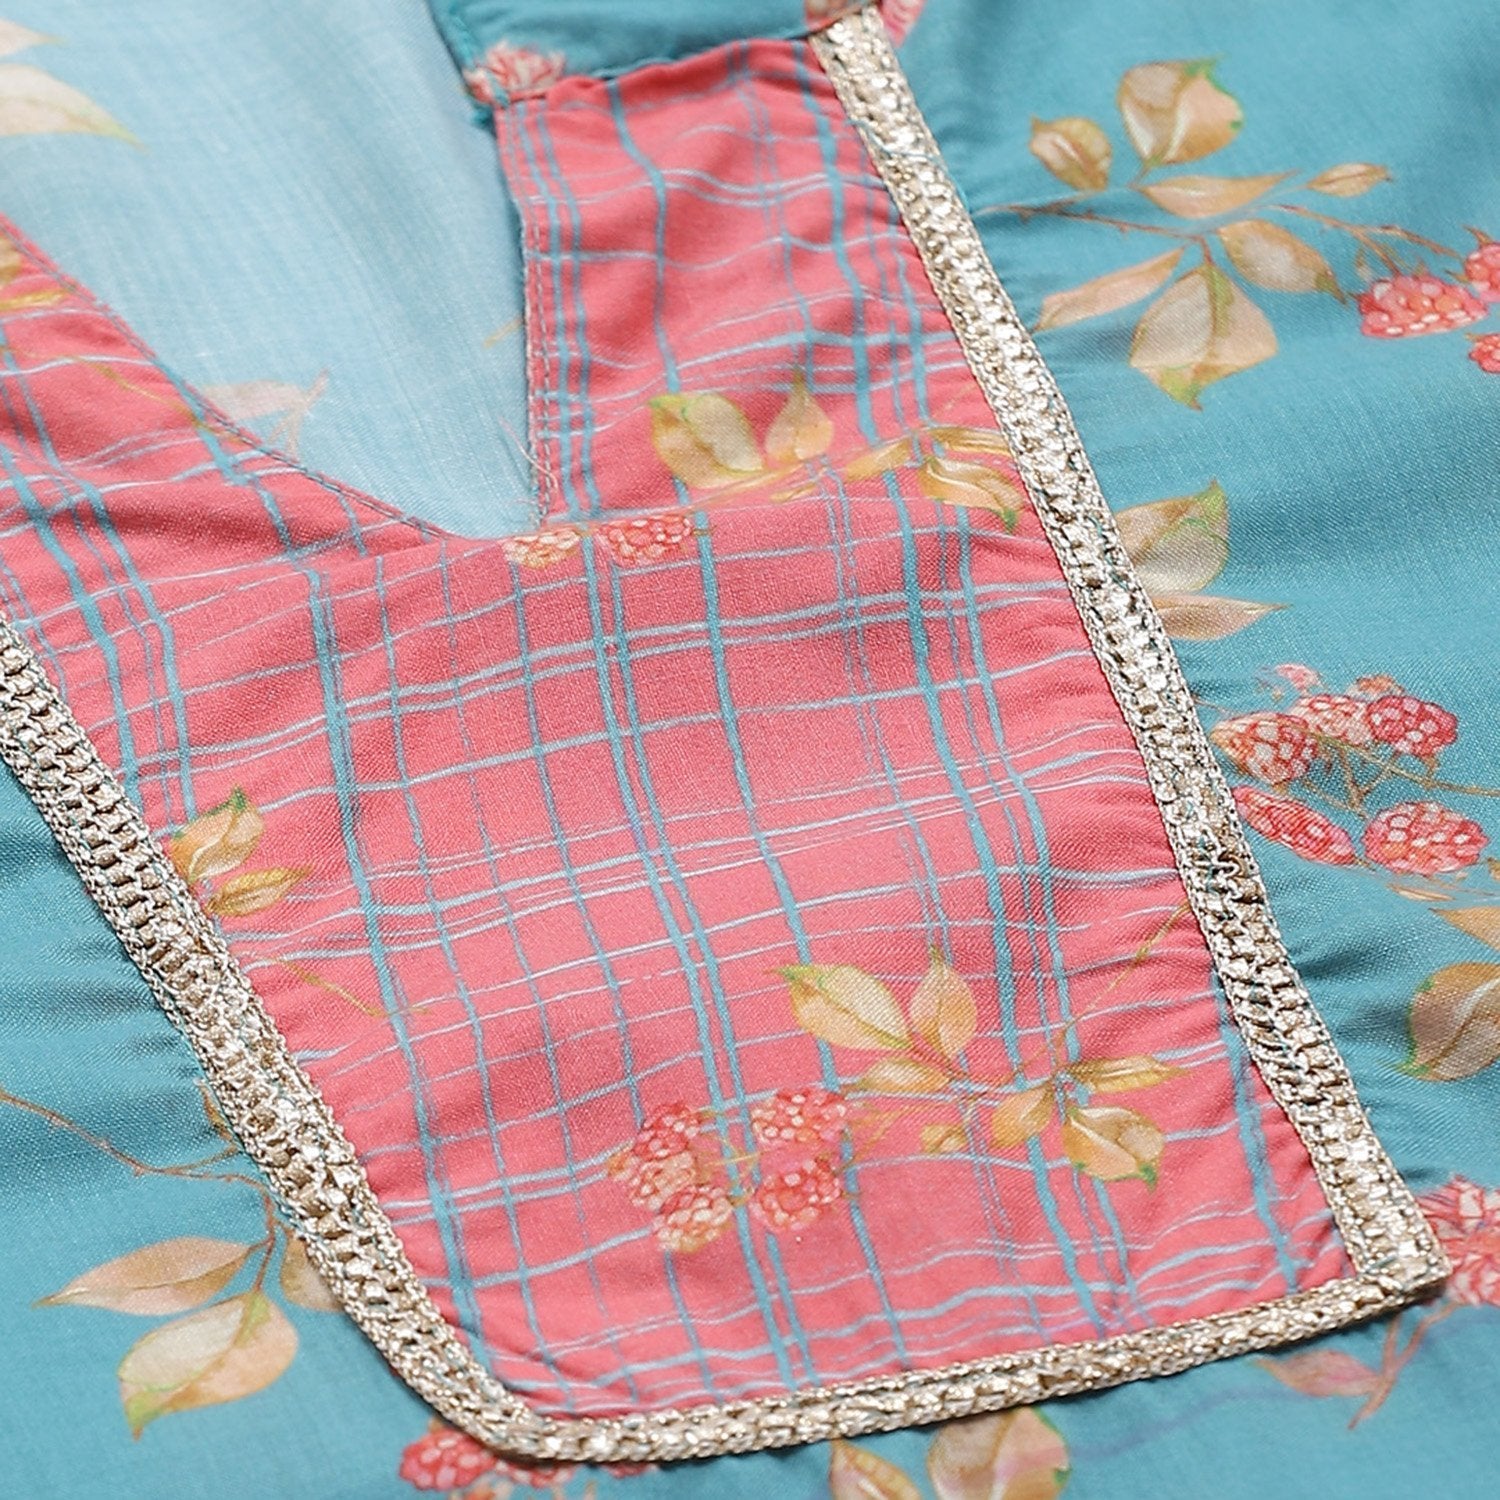 Women's Multicolor Poly Cotton Printed 3/4 Sleeve Mandrin Neck Casual Kurta Pant Set - Myshka